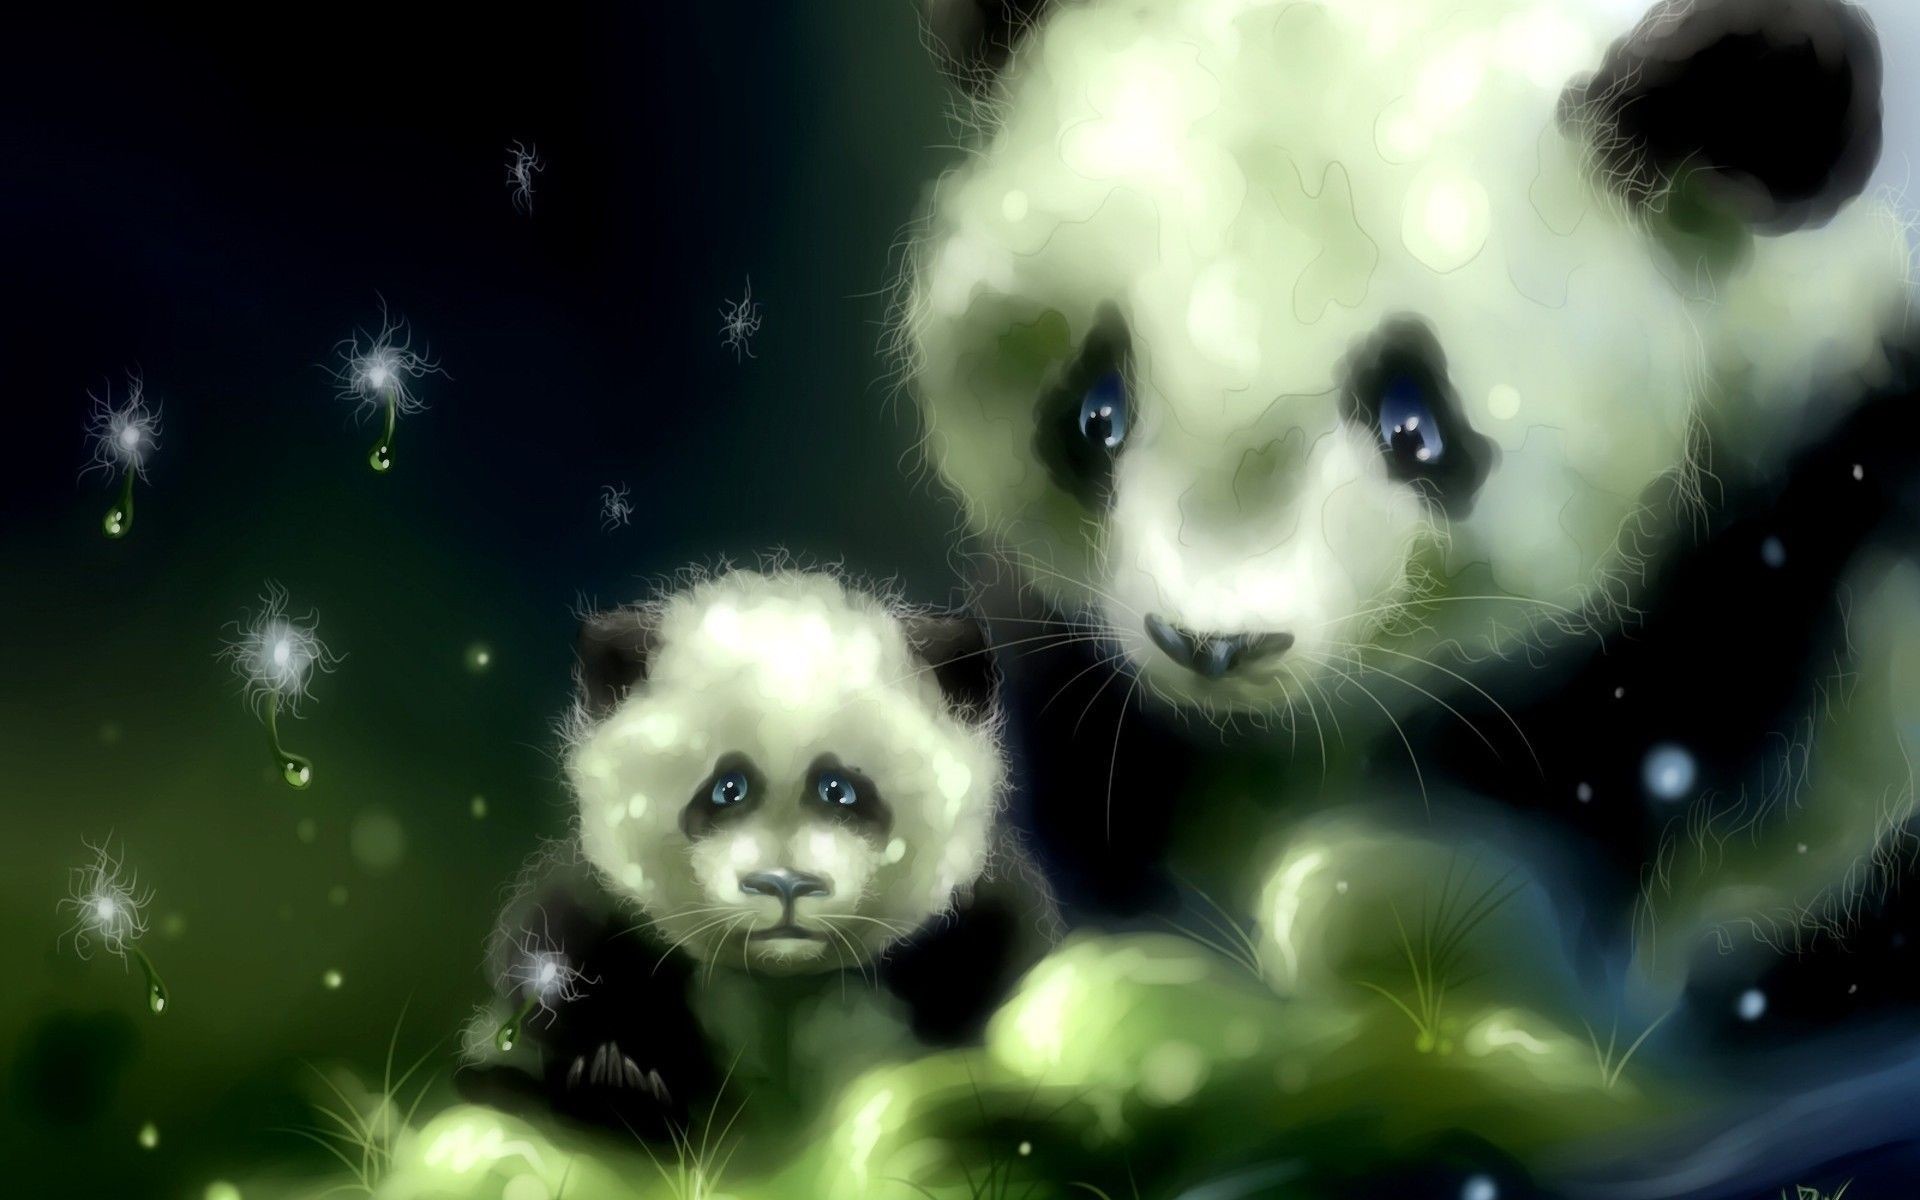 Pictures Of Cartoon Panda